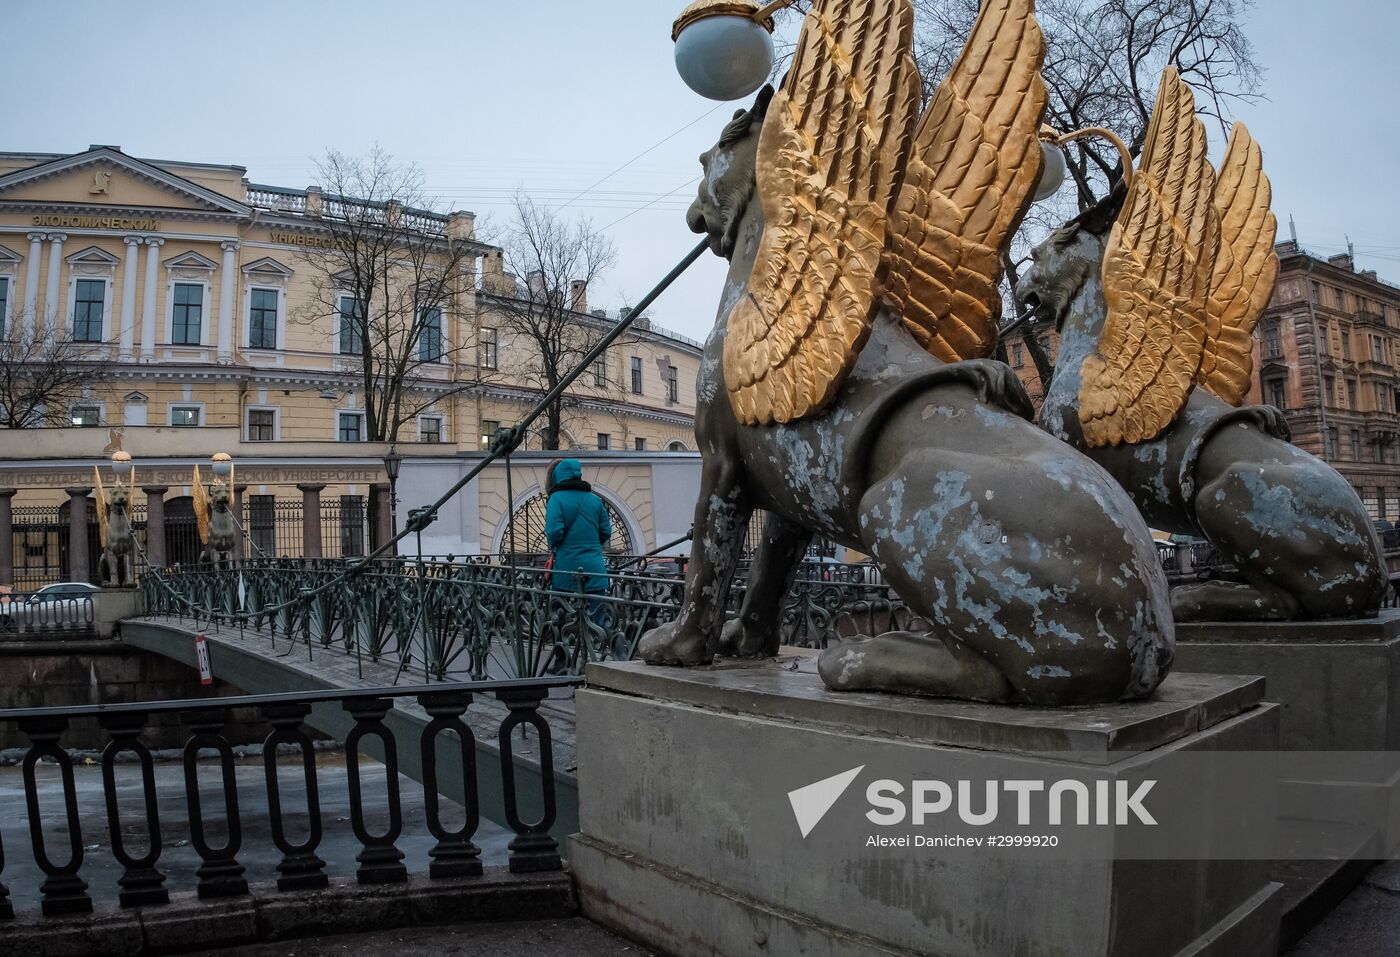 Griffin statues on Bank Bridge in St. Petersburg